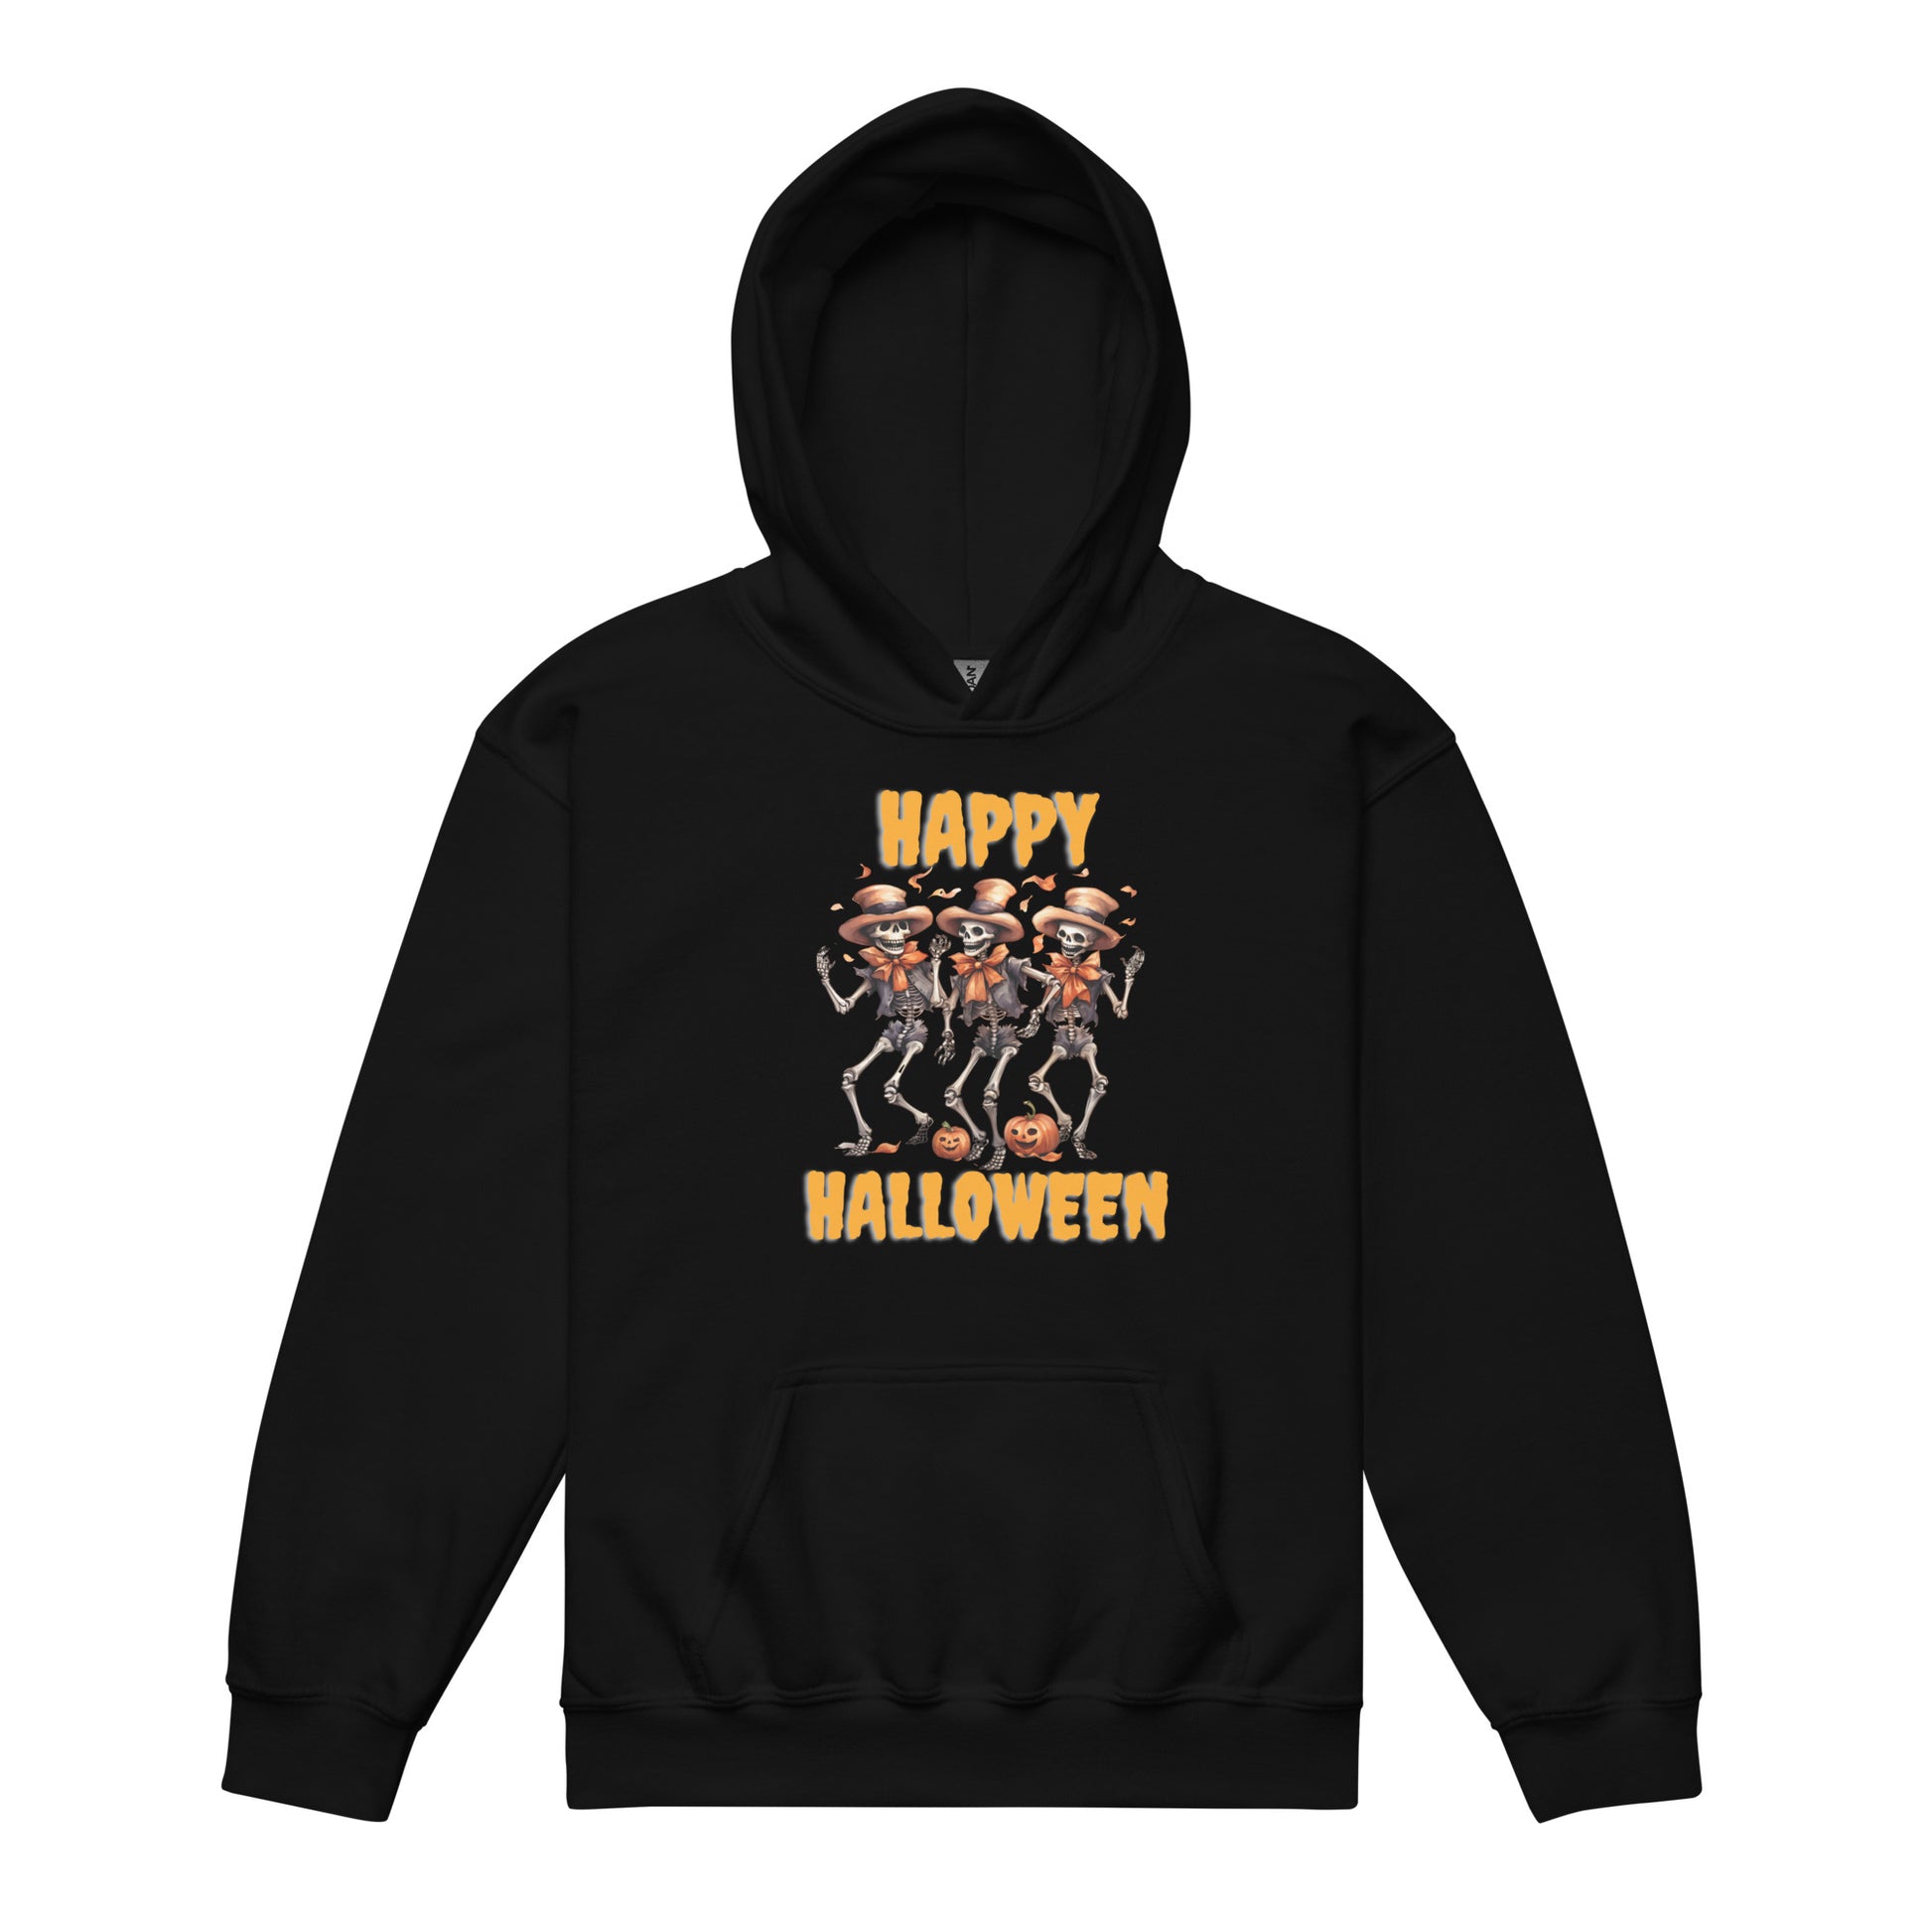 Kids Black Hoodie - Happy Halloween Skeleton Graphic, Front View